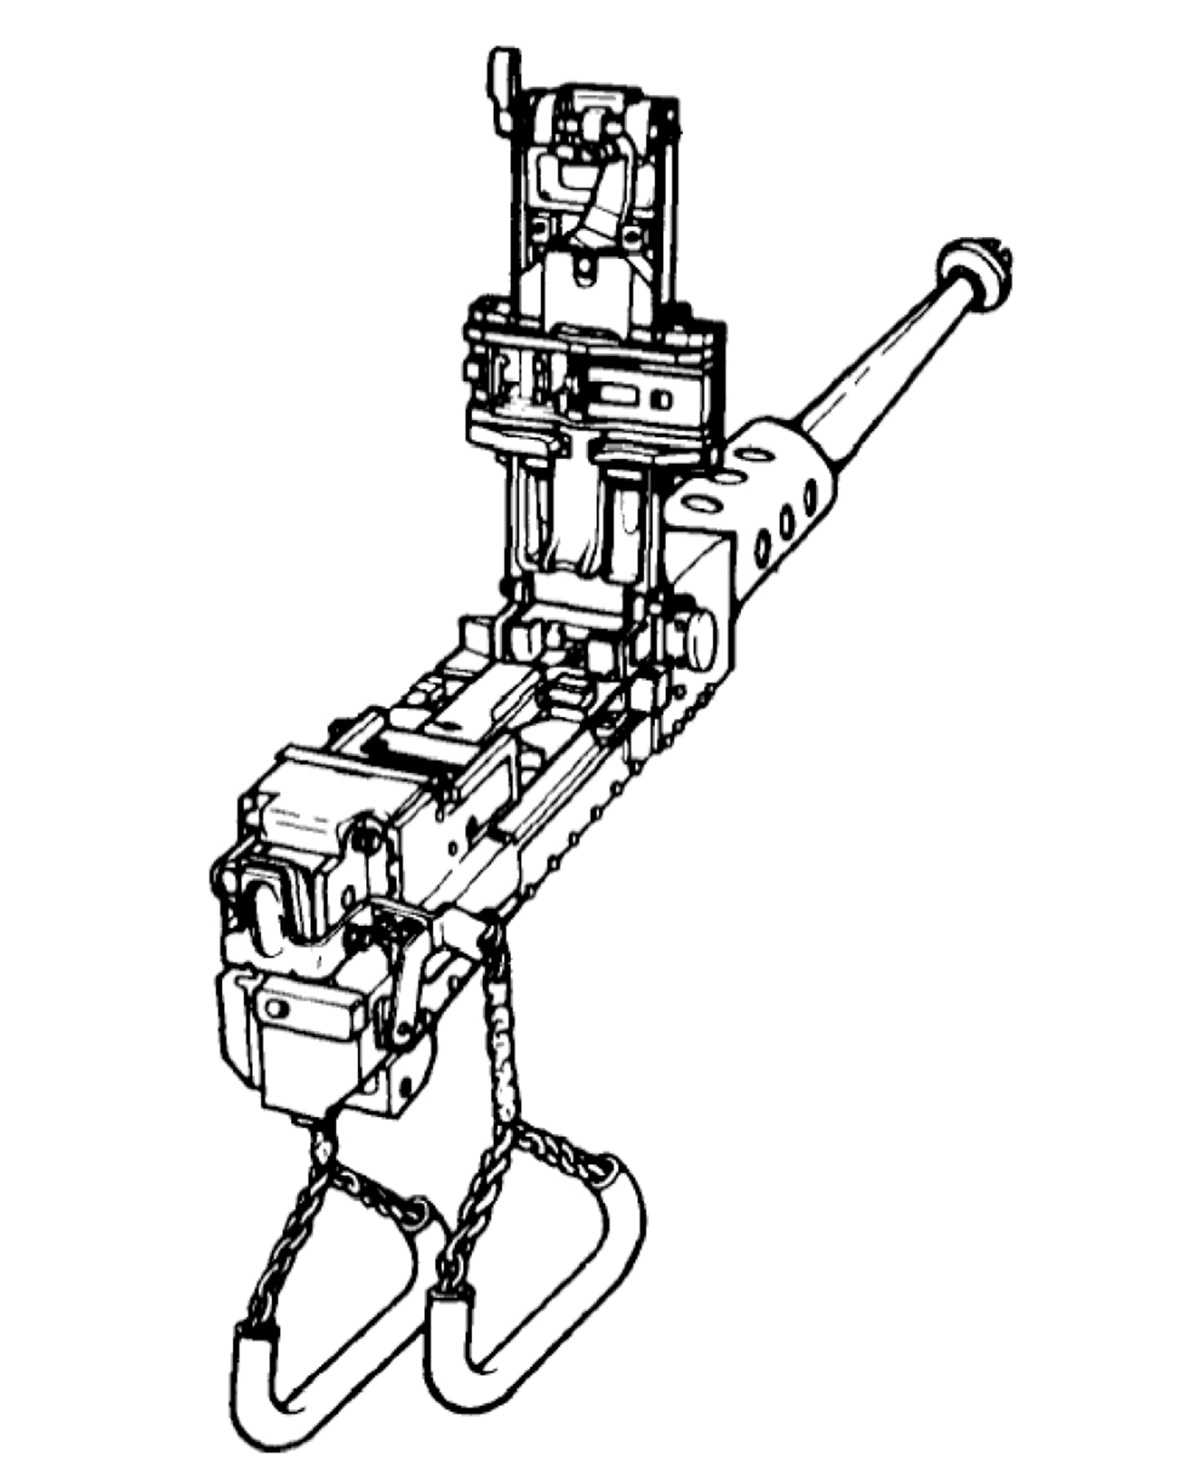 A diagram of the M85 .50-caliber machine gun mounted on US tanks in World War II.